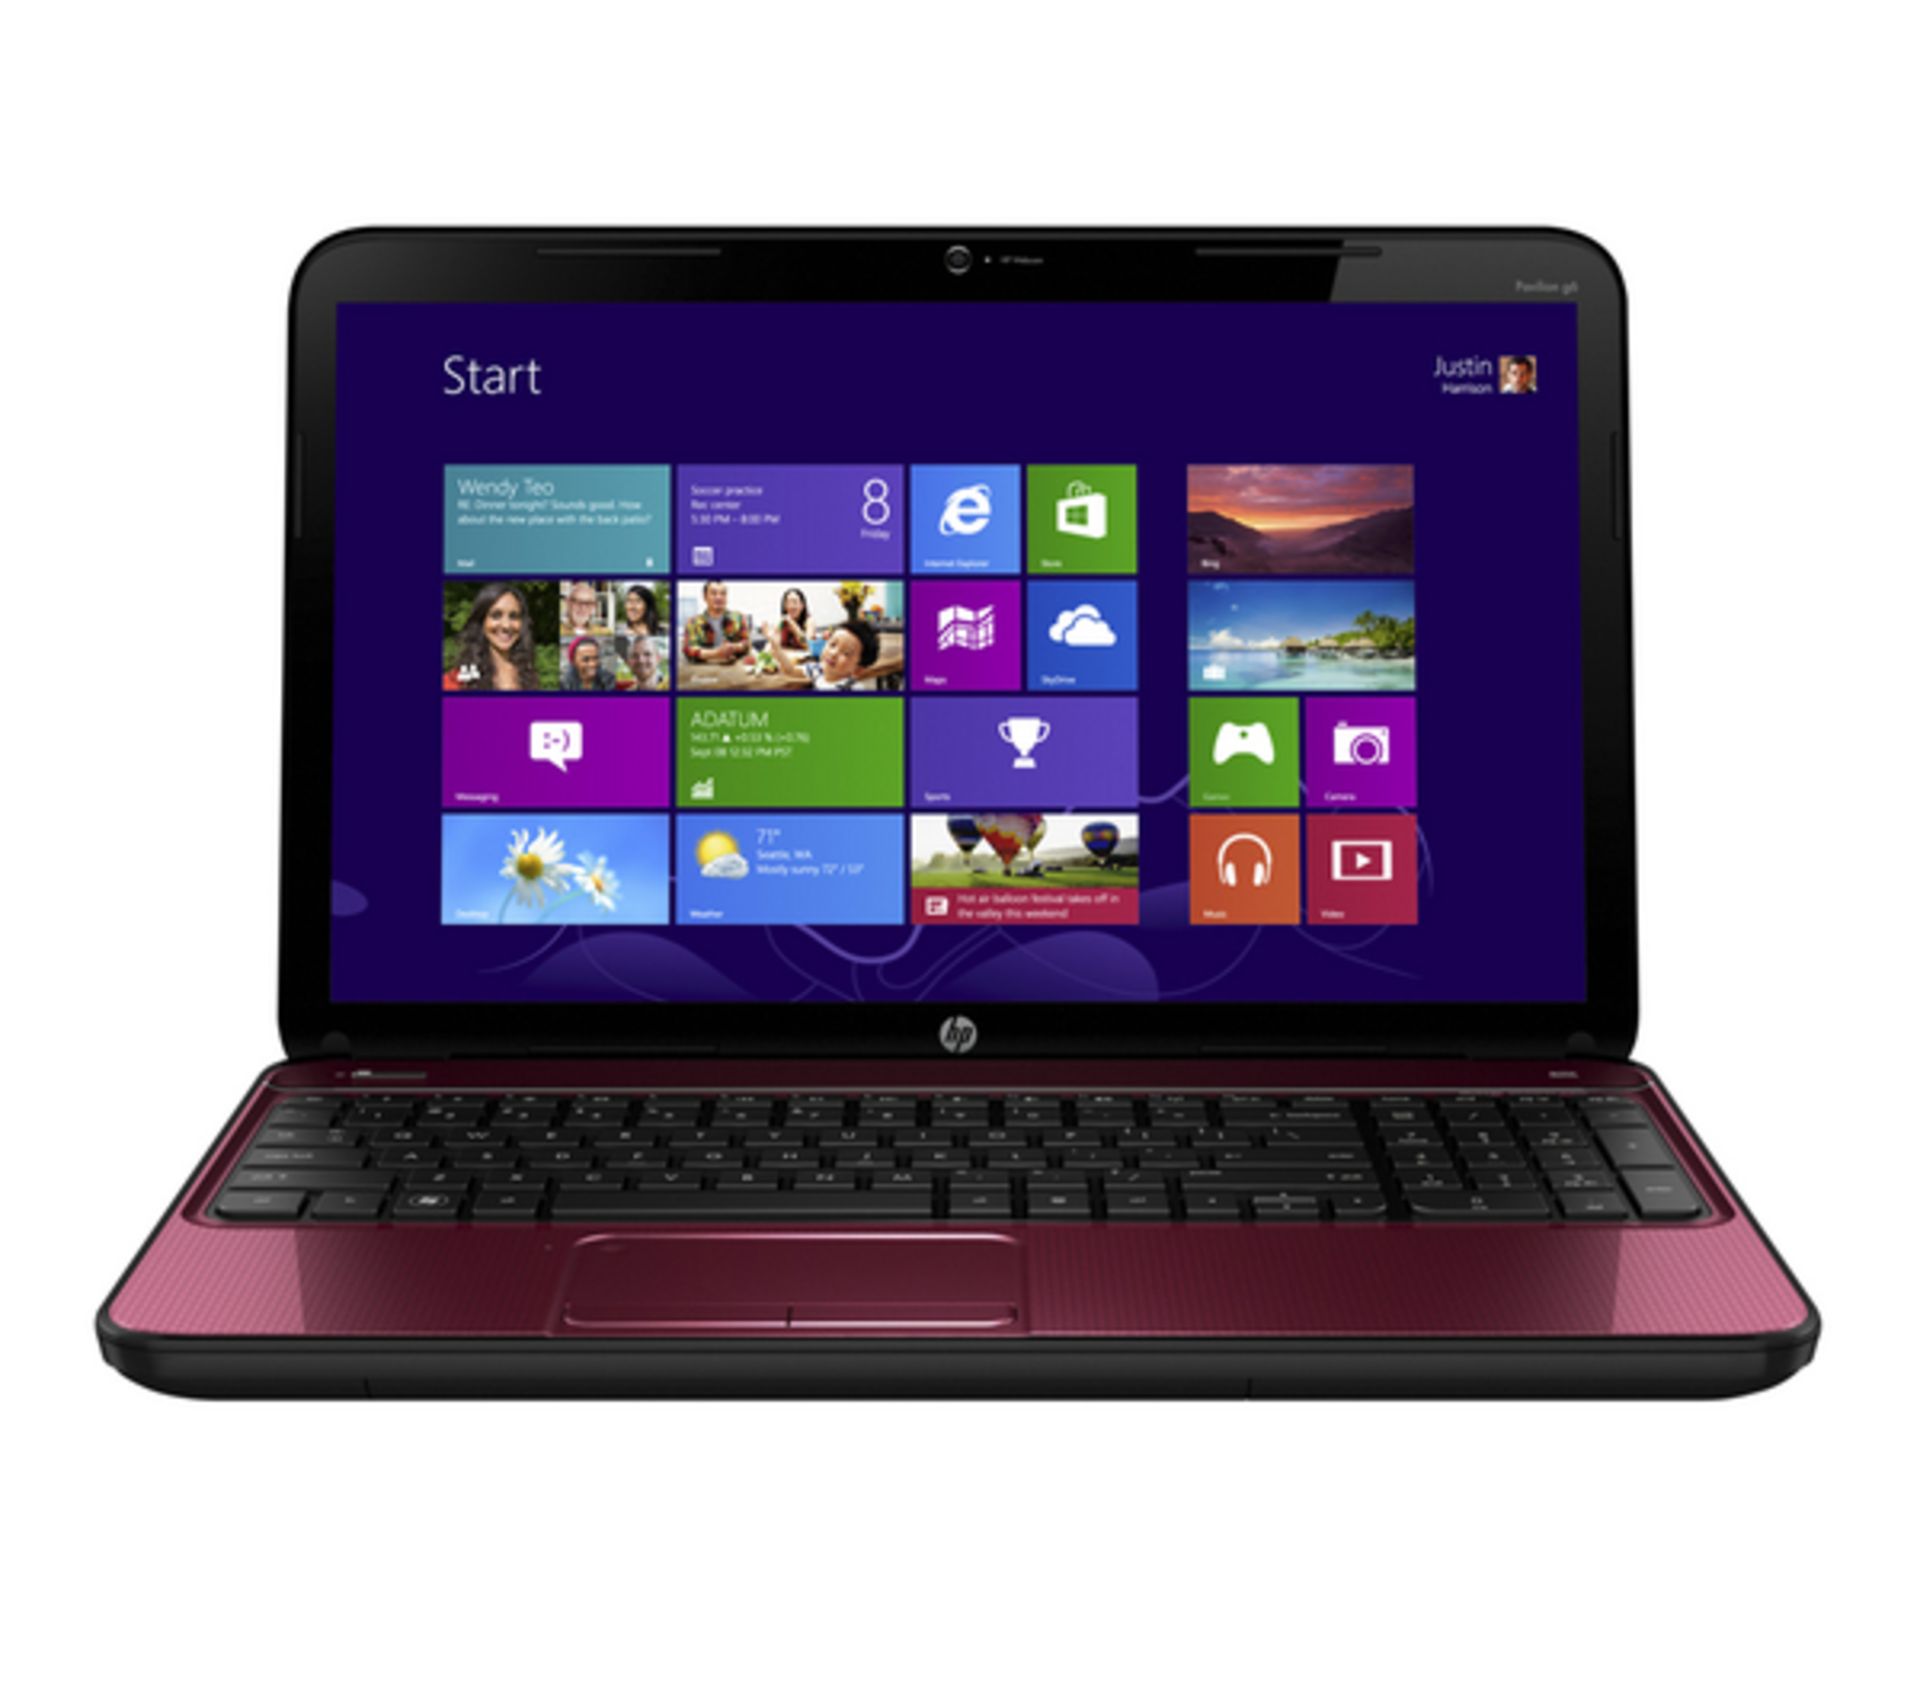 V Grade B HP G6 2240 (Red) Laptop AMD Dual Core E2-1800 (1.7Ghz) 6Gb 750 Gb WLAN DVDRW 15.6 inch